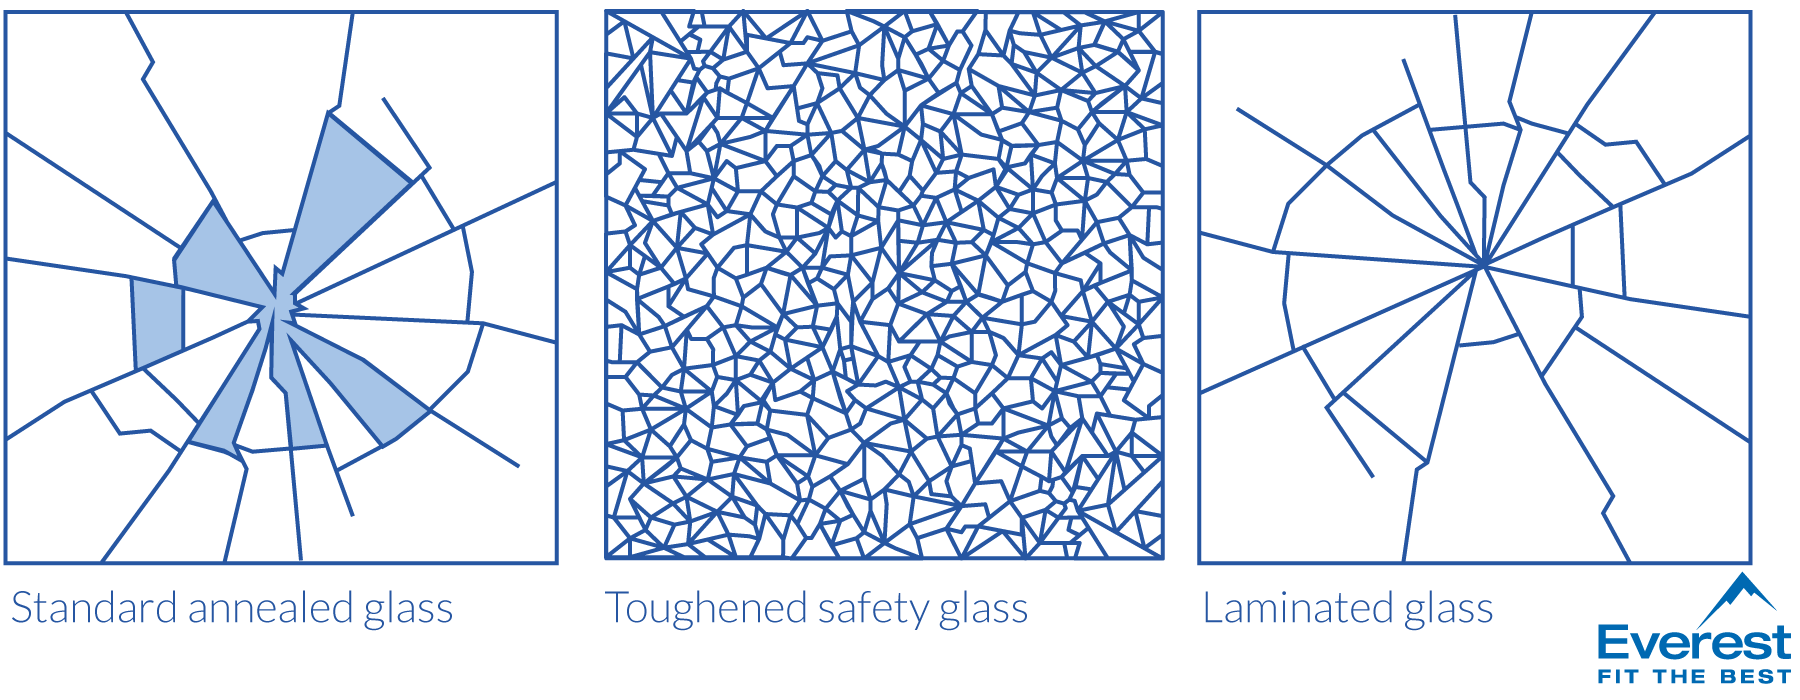 The break pattern of safety glass